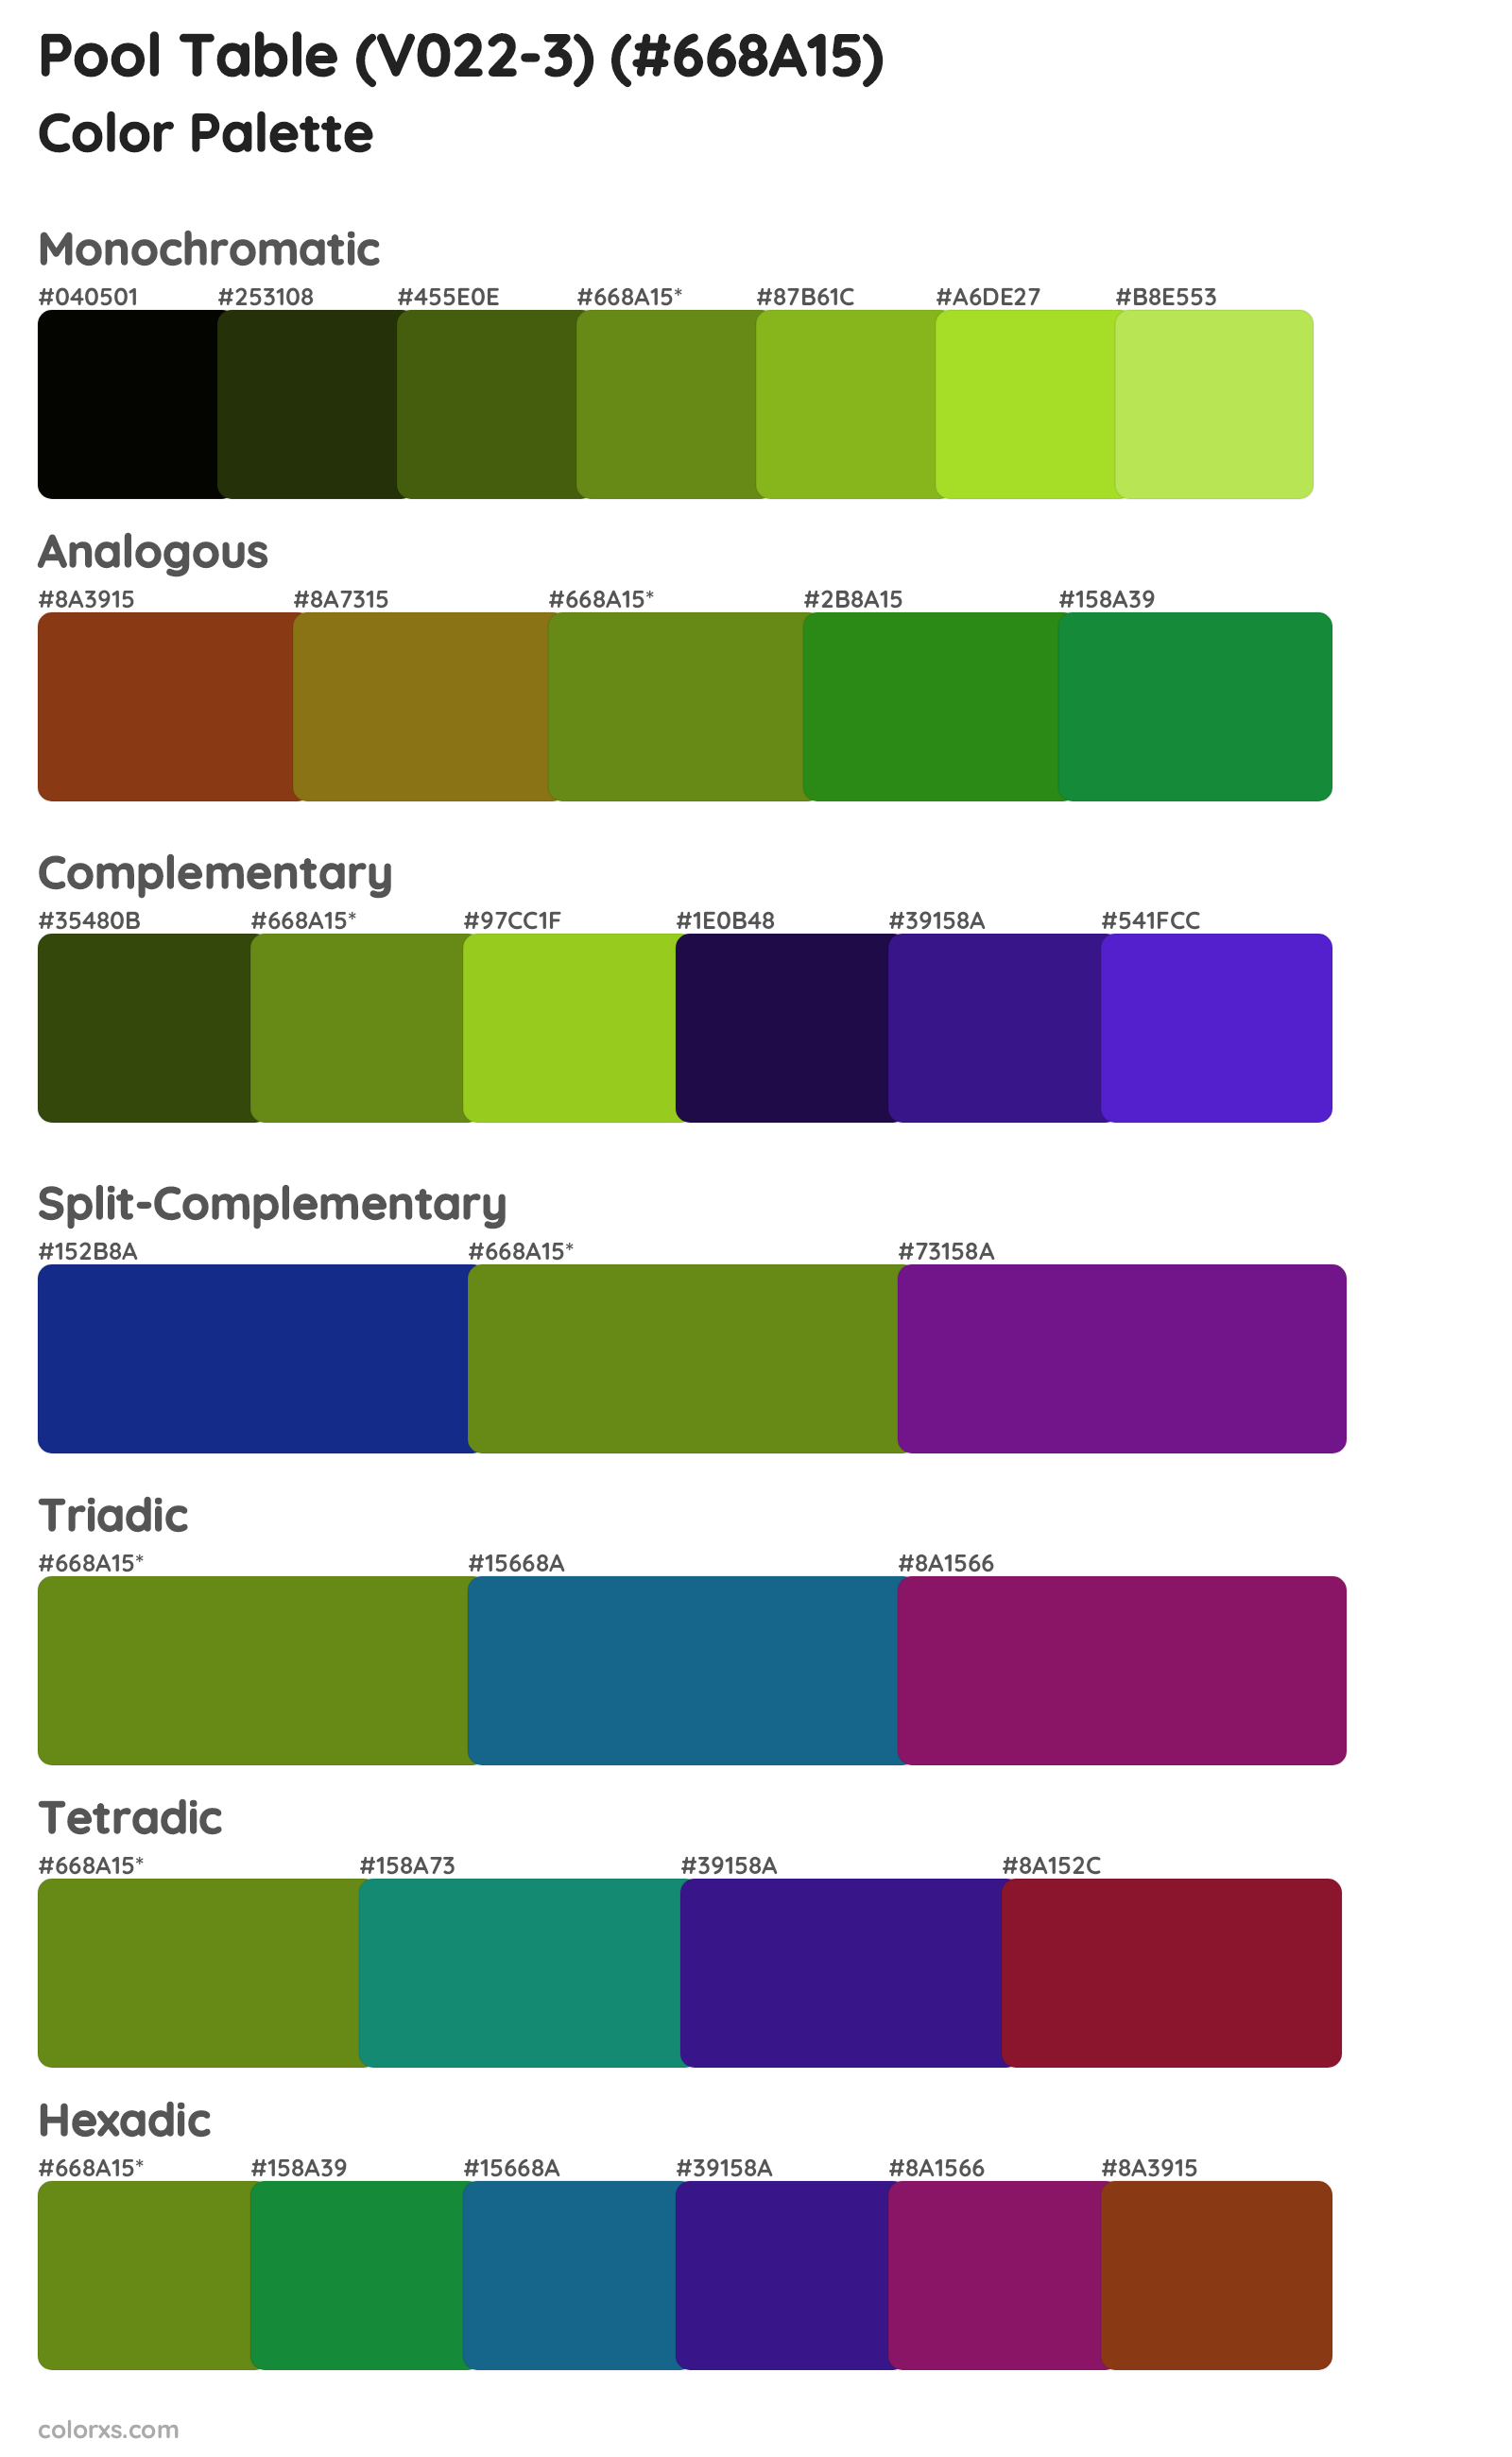 Pool Table (V022-3) Color Scheme Palettes